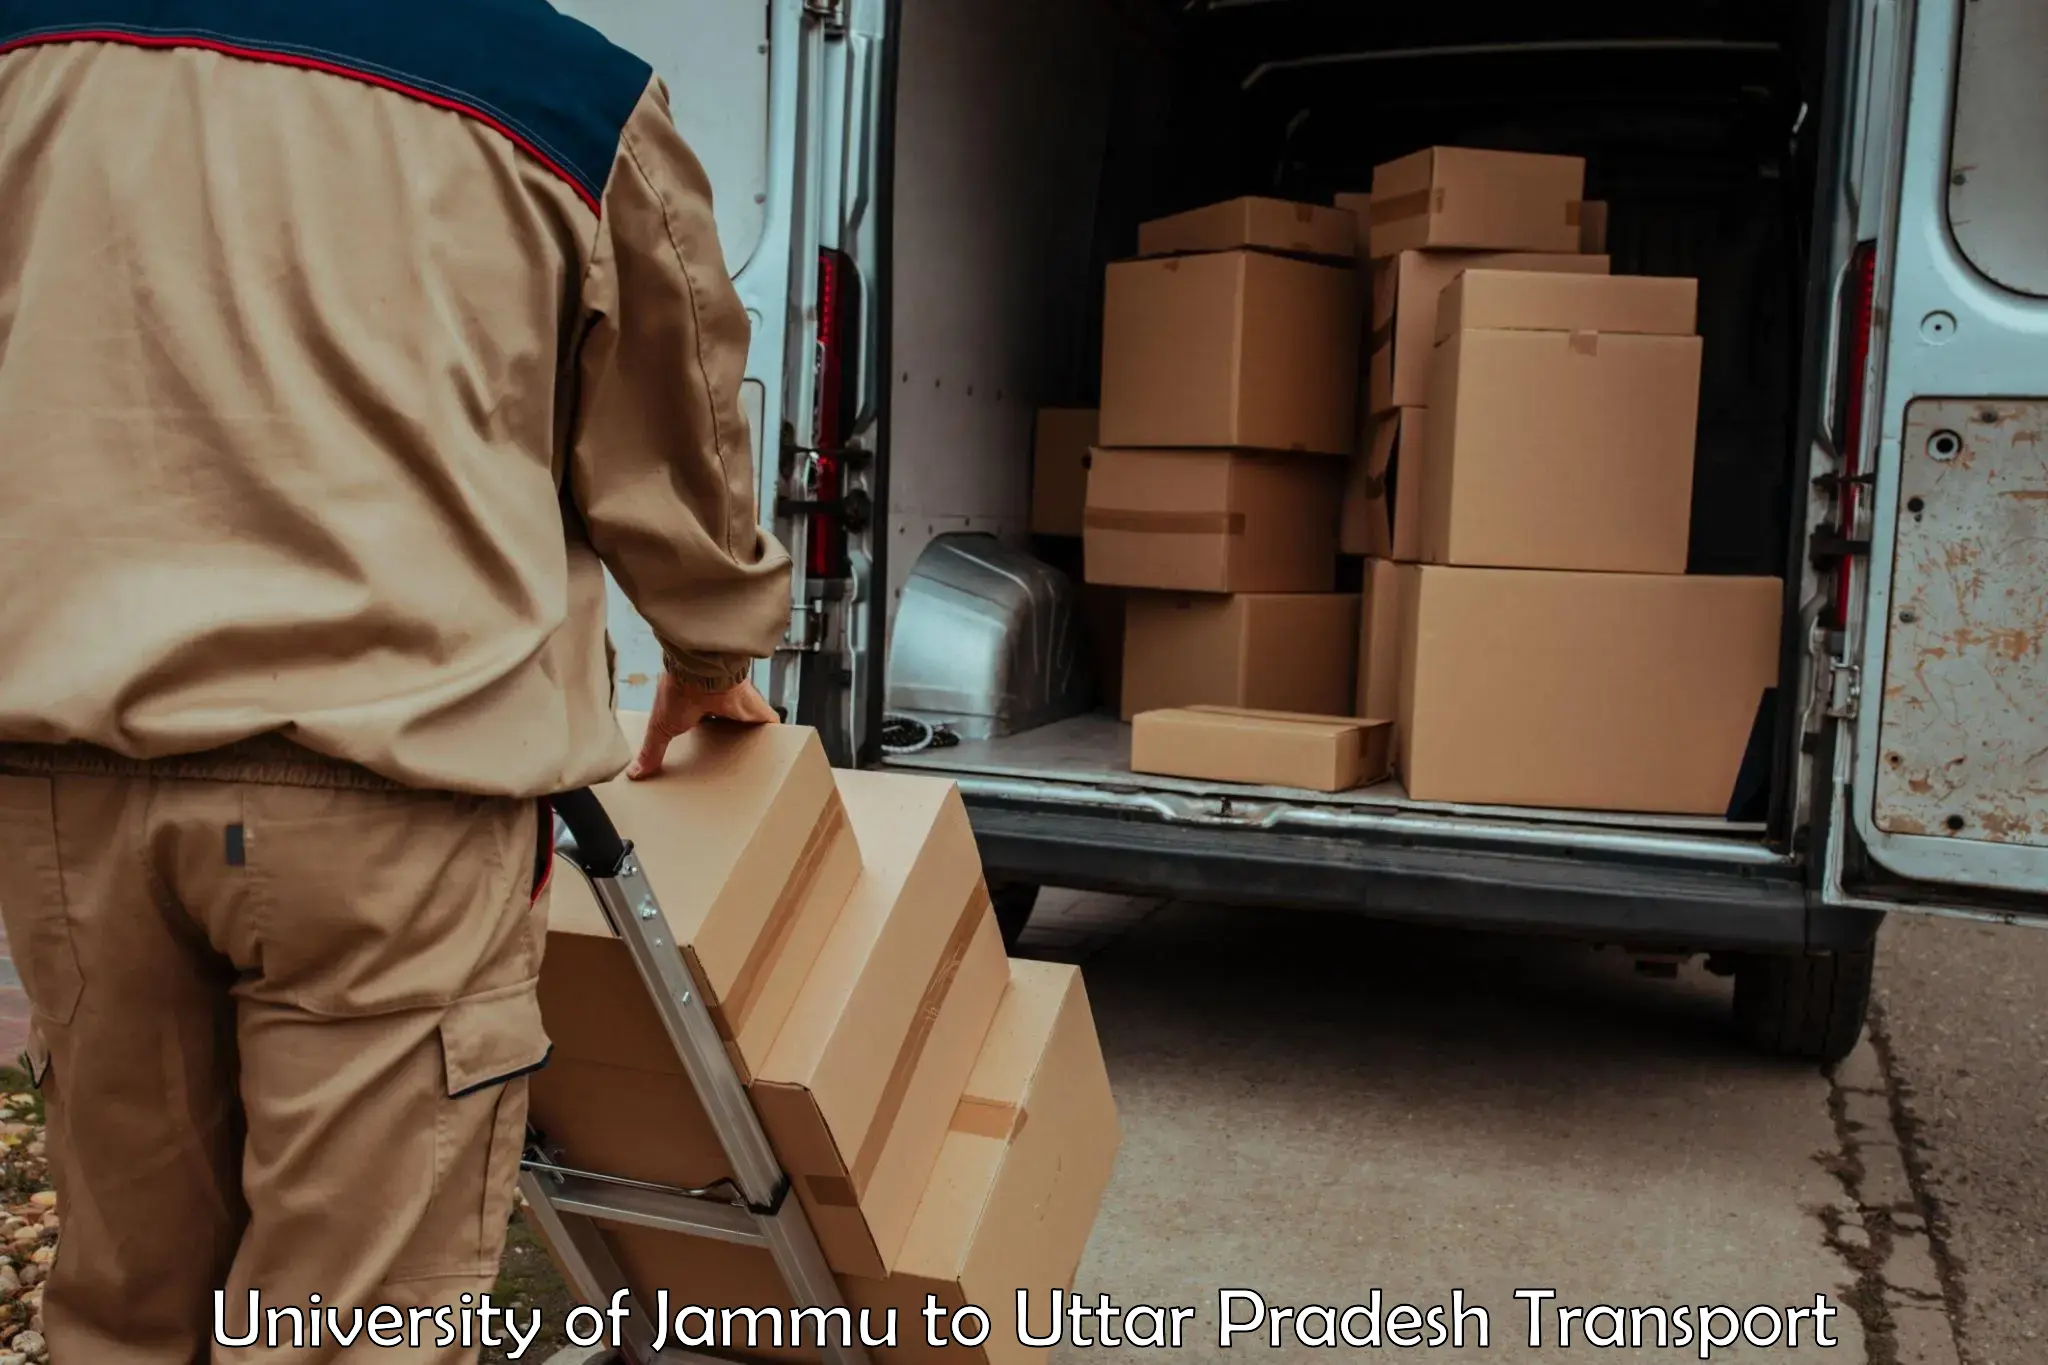 Online transport service University of Jammu to Rath